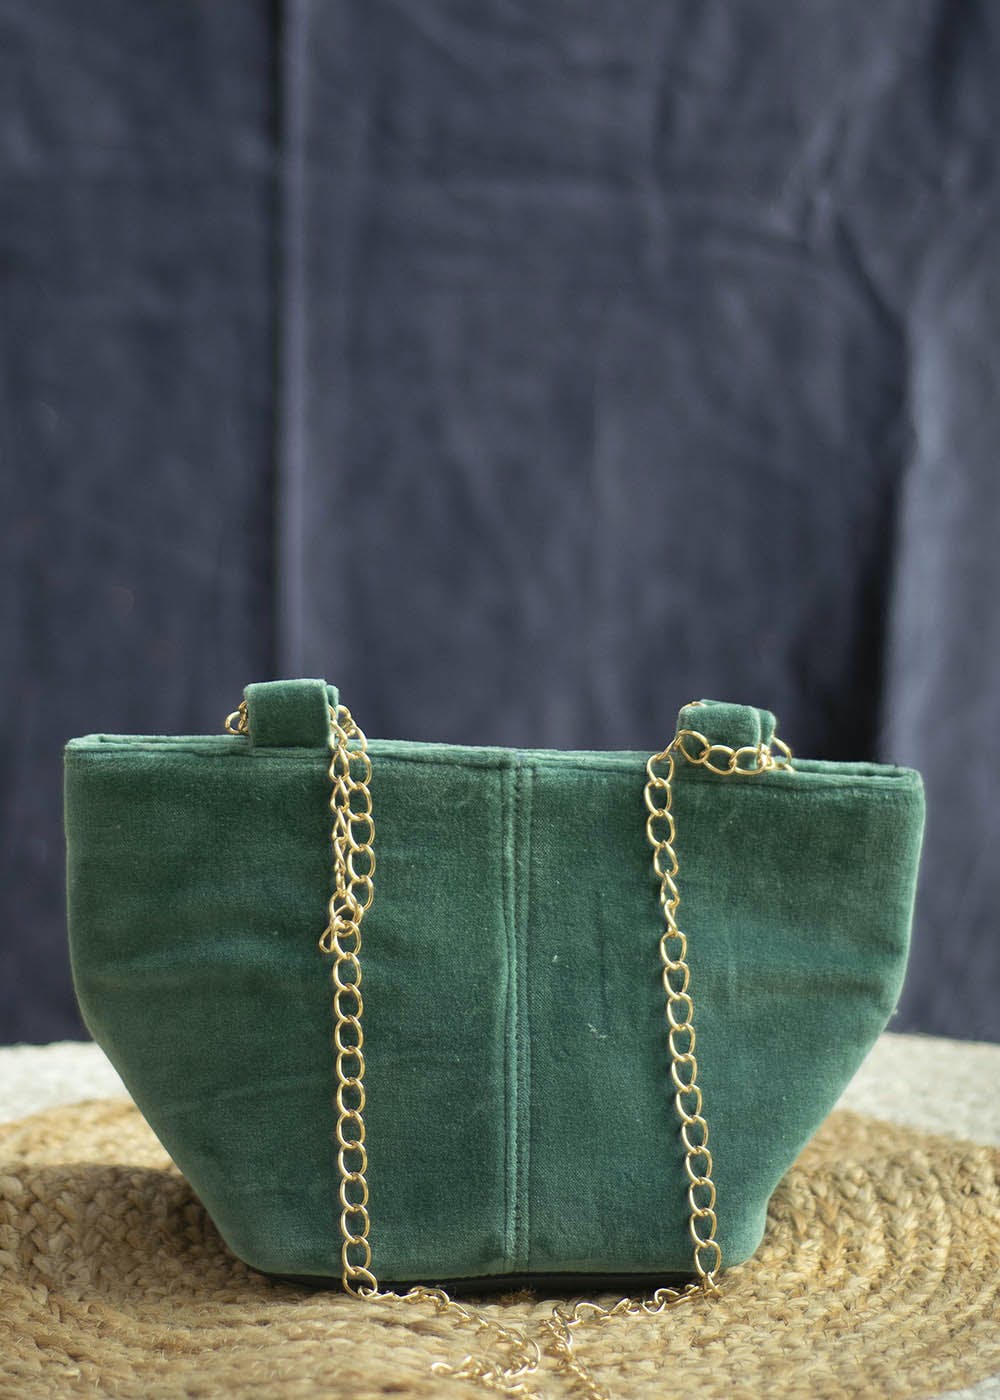 Get Green Bucket Bag at ₹ 1250 | LBB Shop